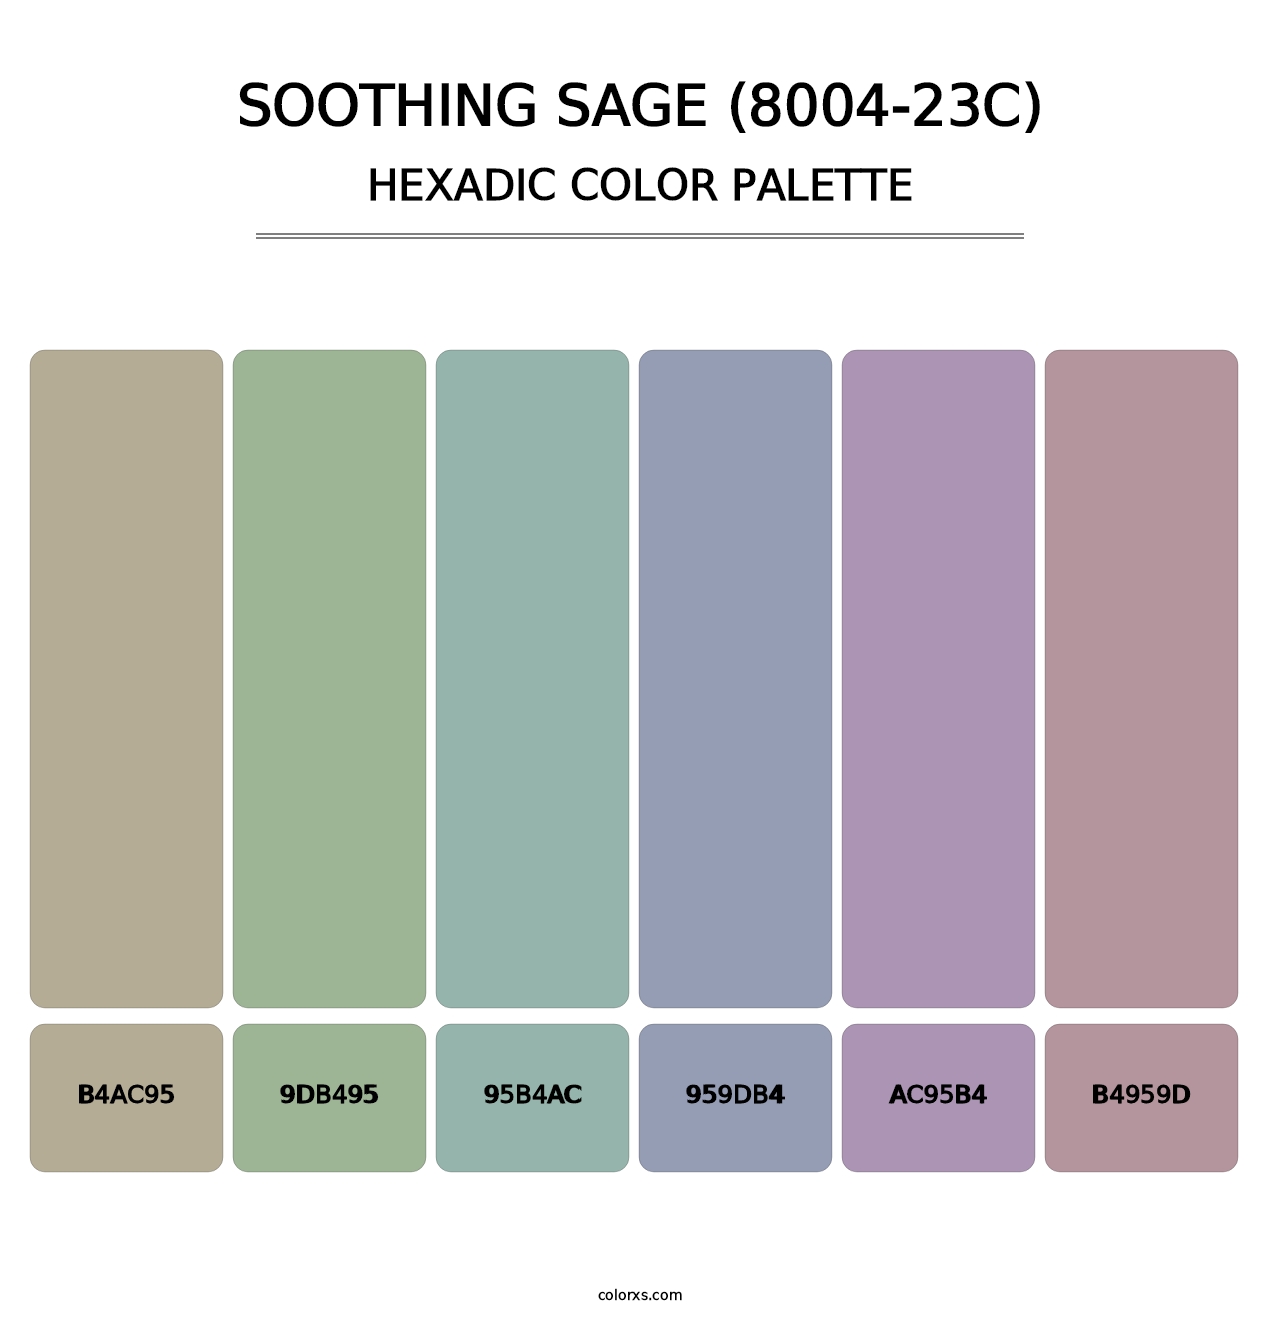 Soothing Sage (8004-23C) - Hexadic Color Palette